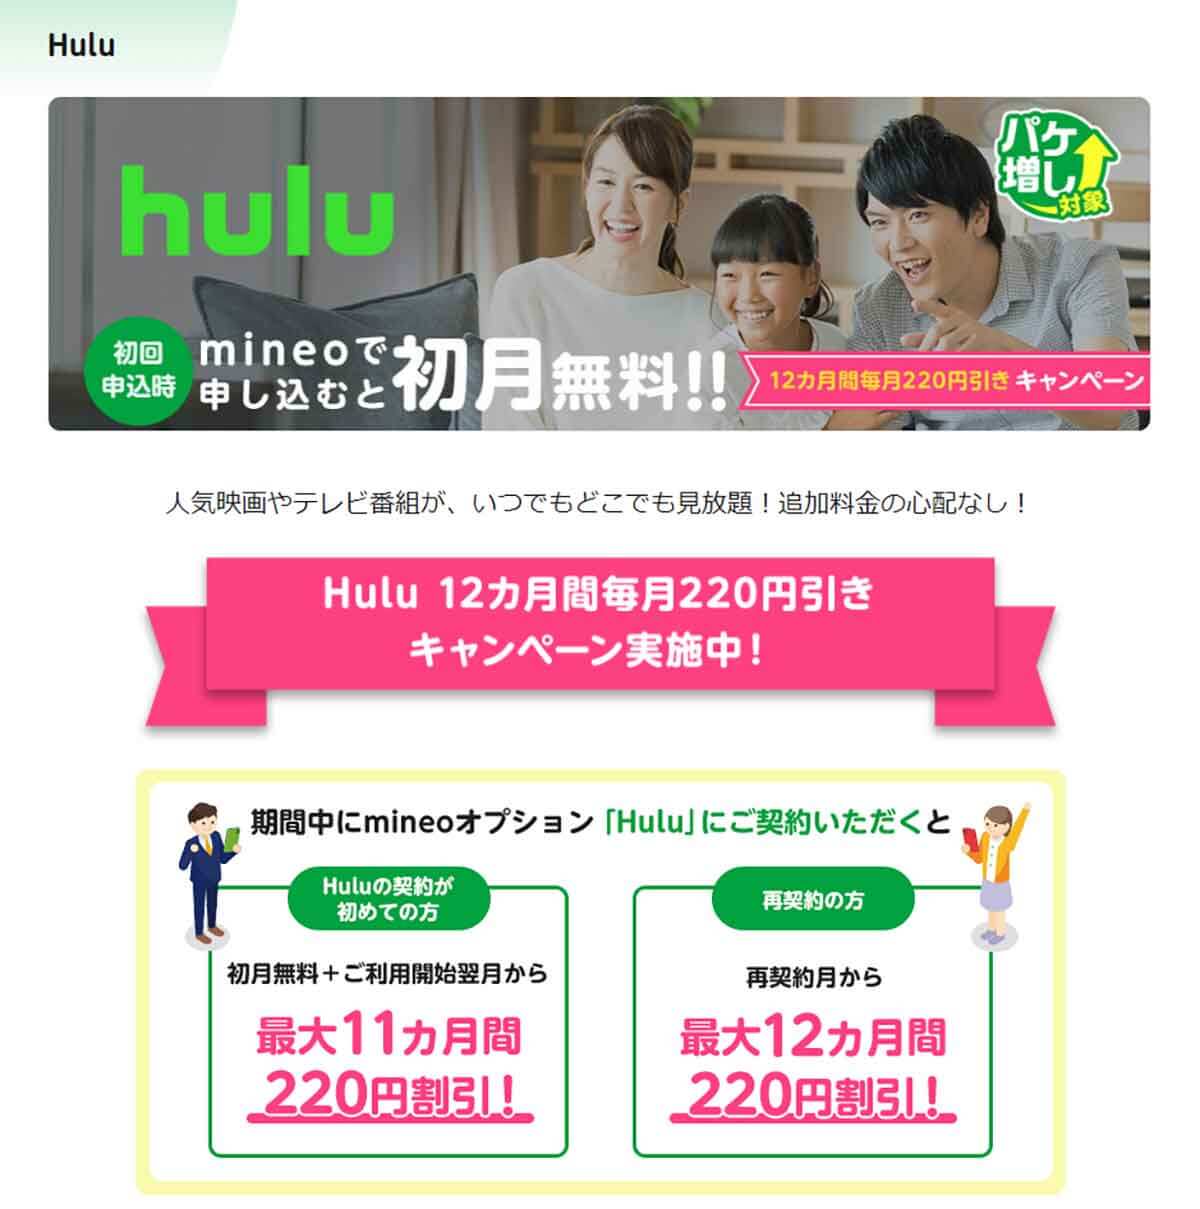 Hulu 12カ月間毎月220円引きキャンペーン